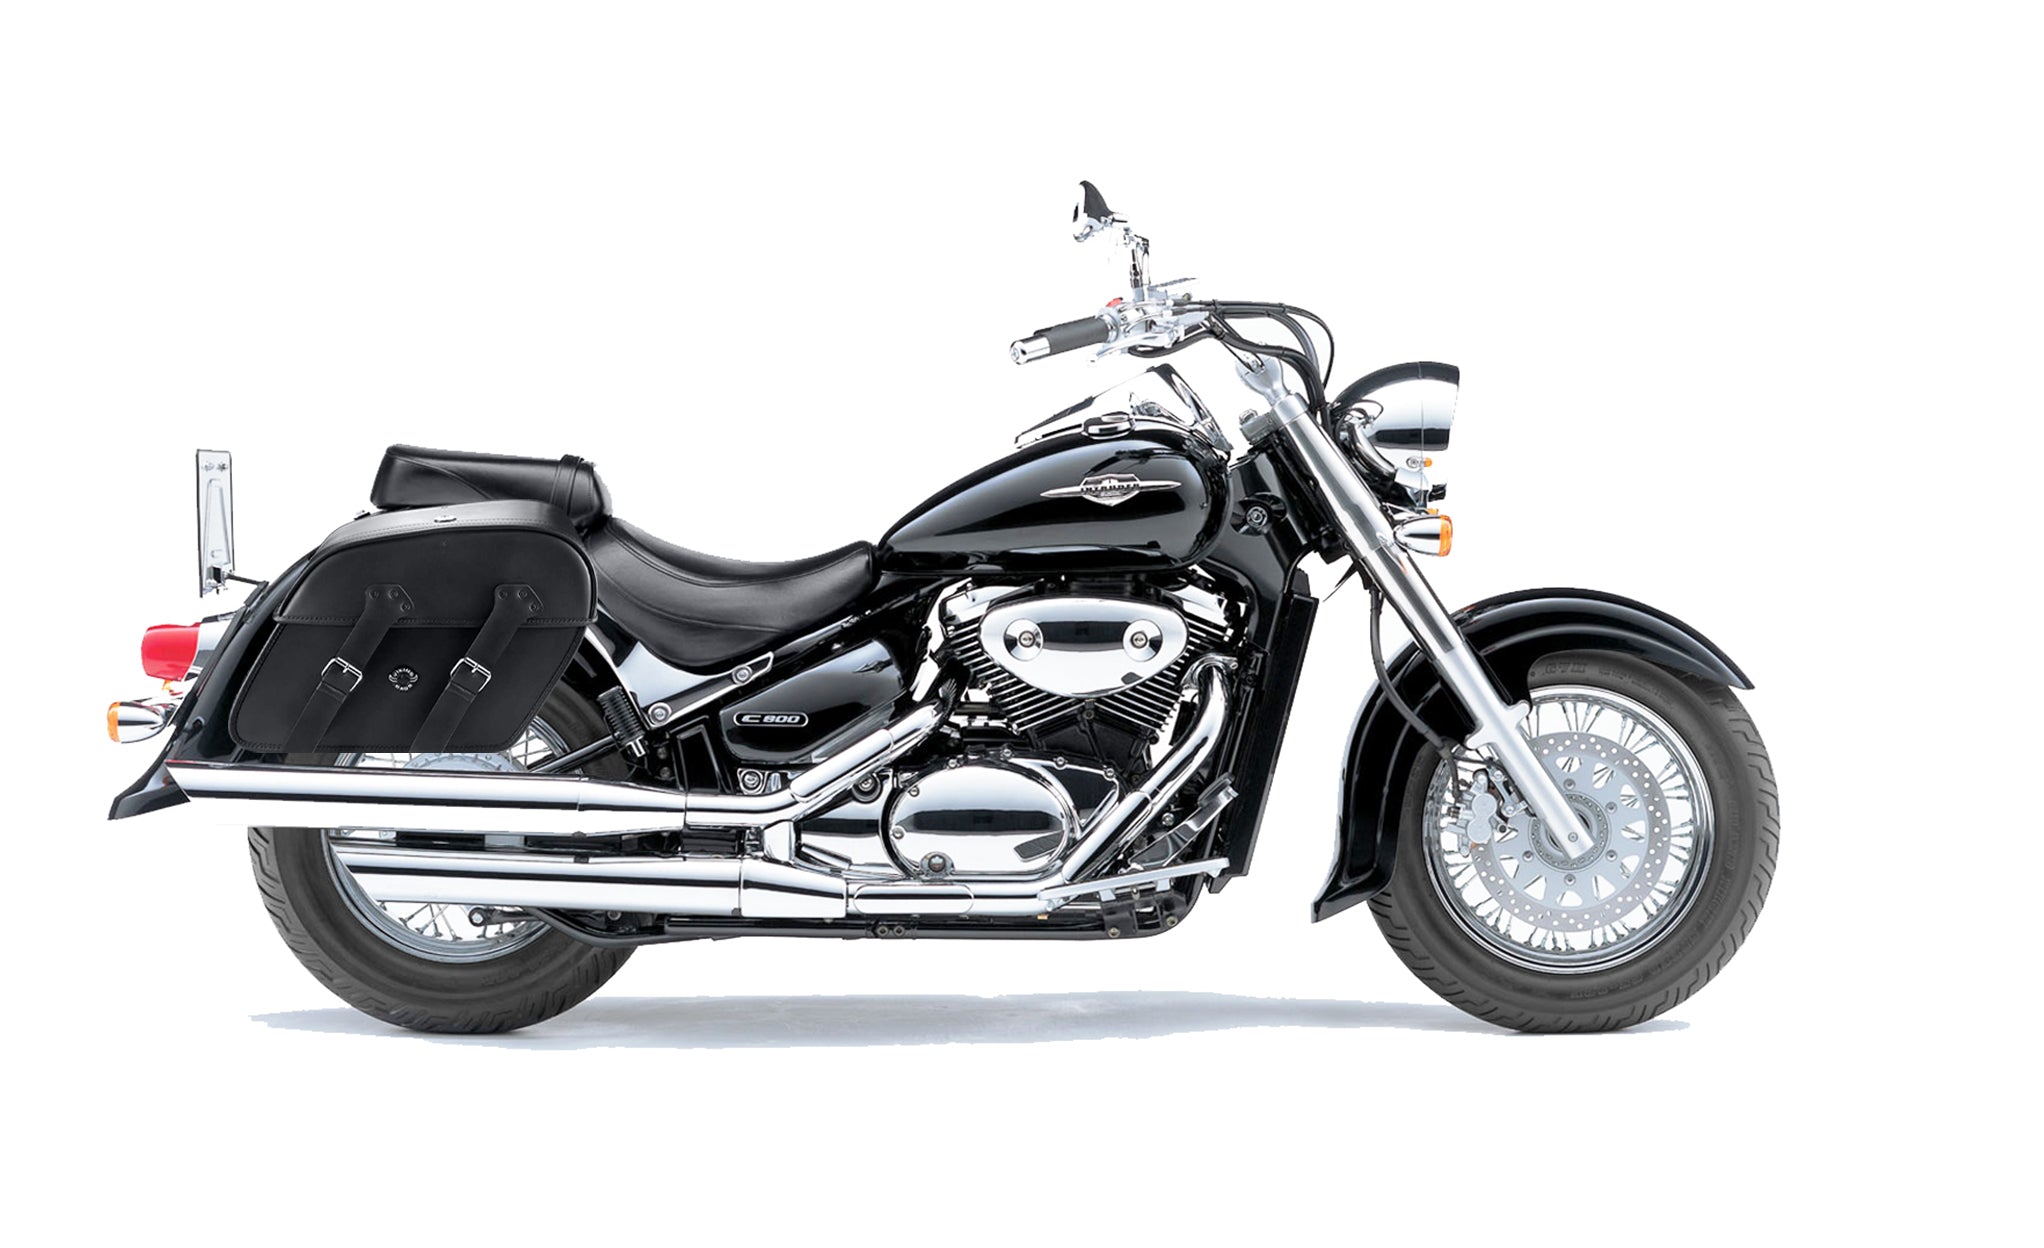 Viking Raven Large Suzuki Volusia 800 Motorcycle Leather Saddlebags on Bike Photo @expand